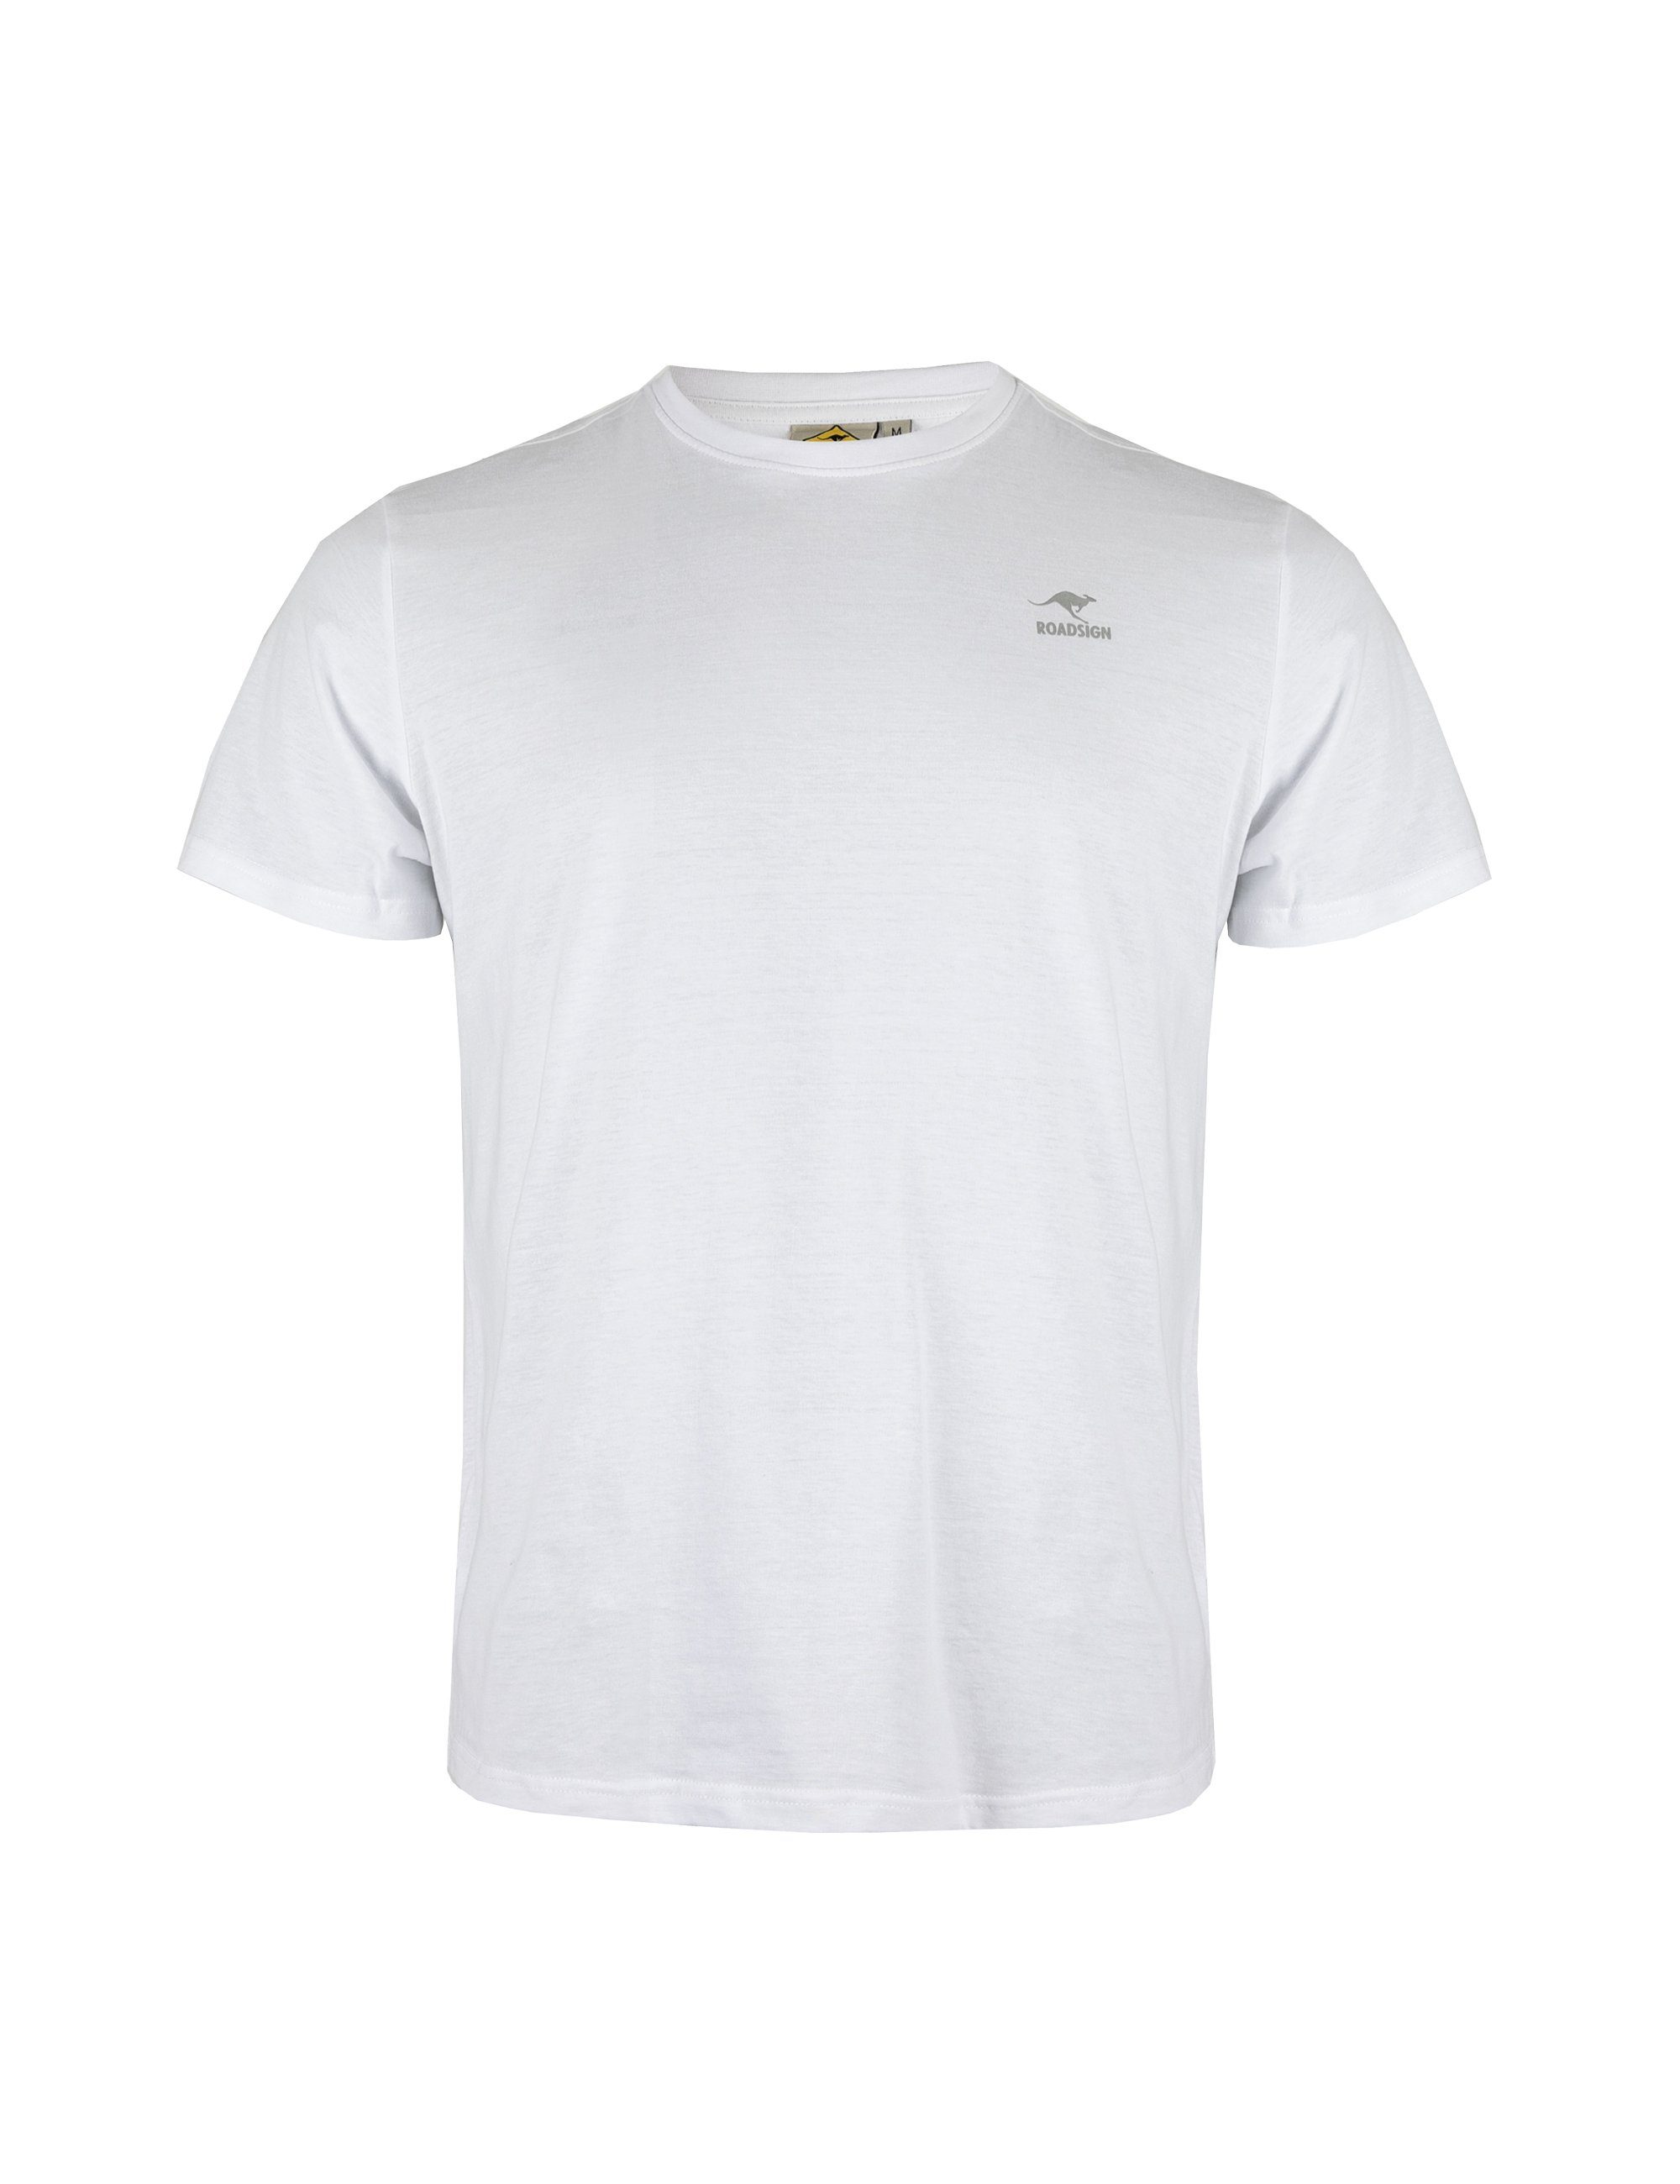 Basic australia Baumwolle Rundhalsausschnitt, ROADSIGN T-Shirt Pack) (Doppelpack, 2er-Pack) mit 2-tlg., weiß 100 (2-er %